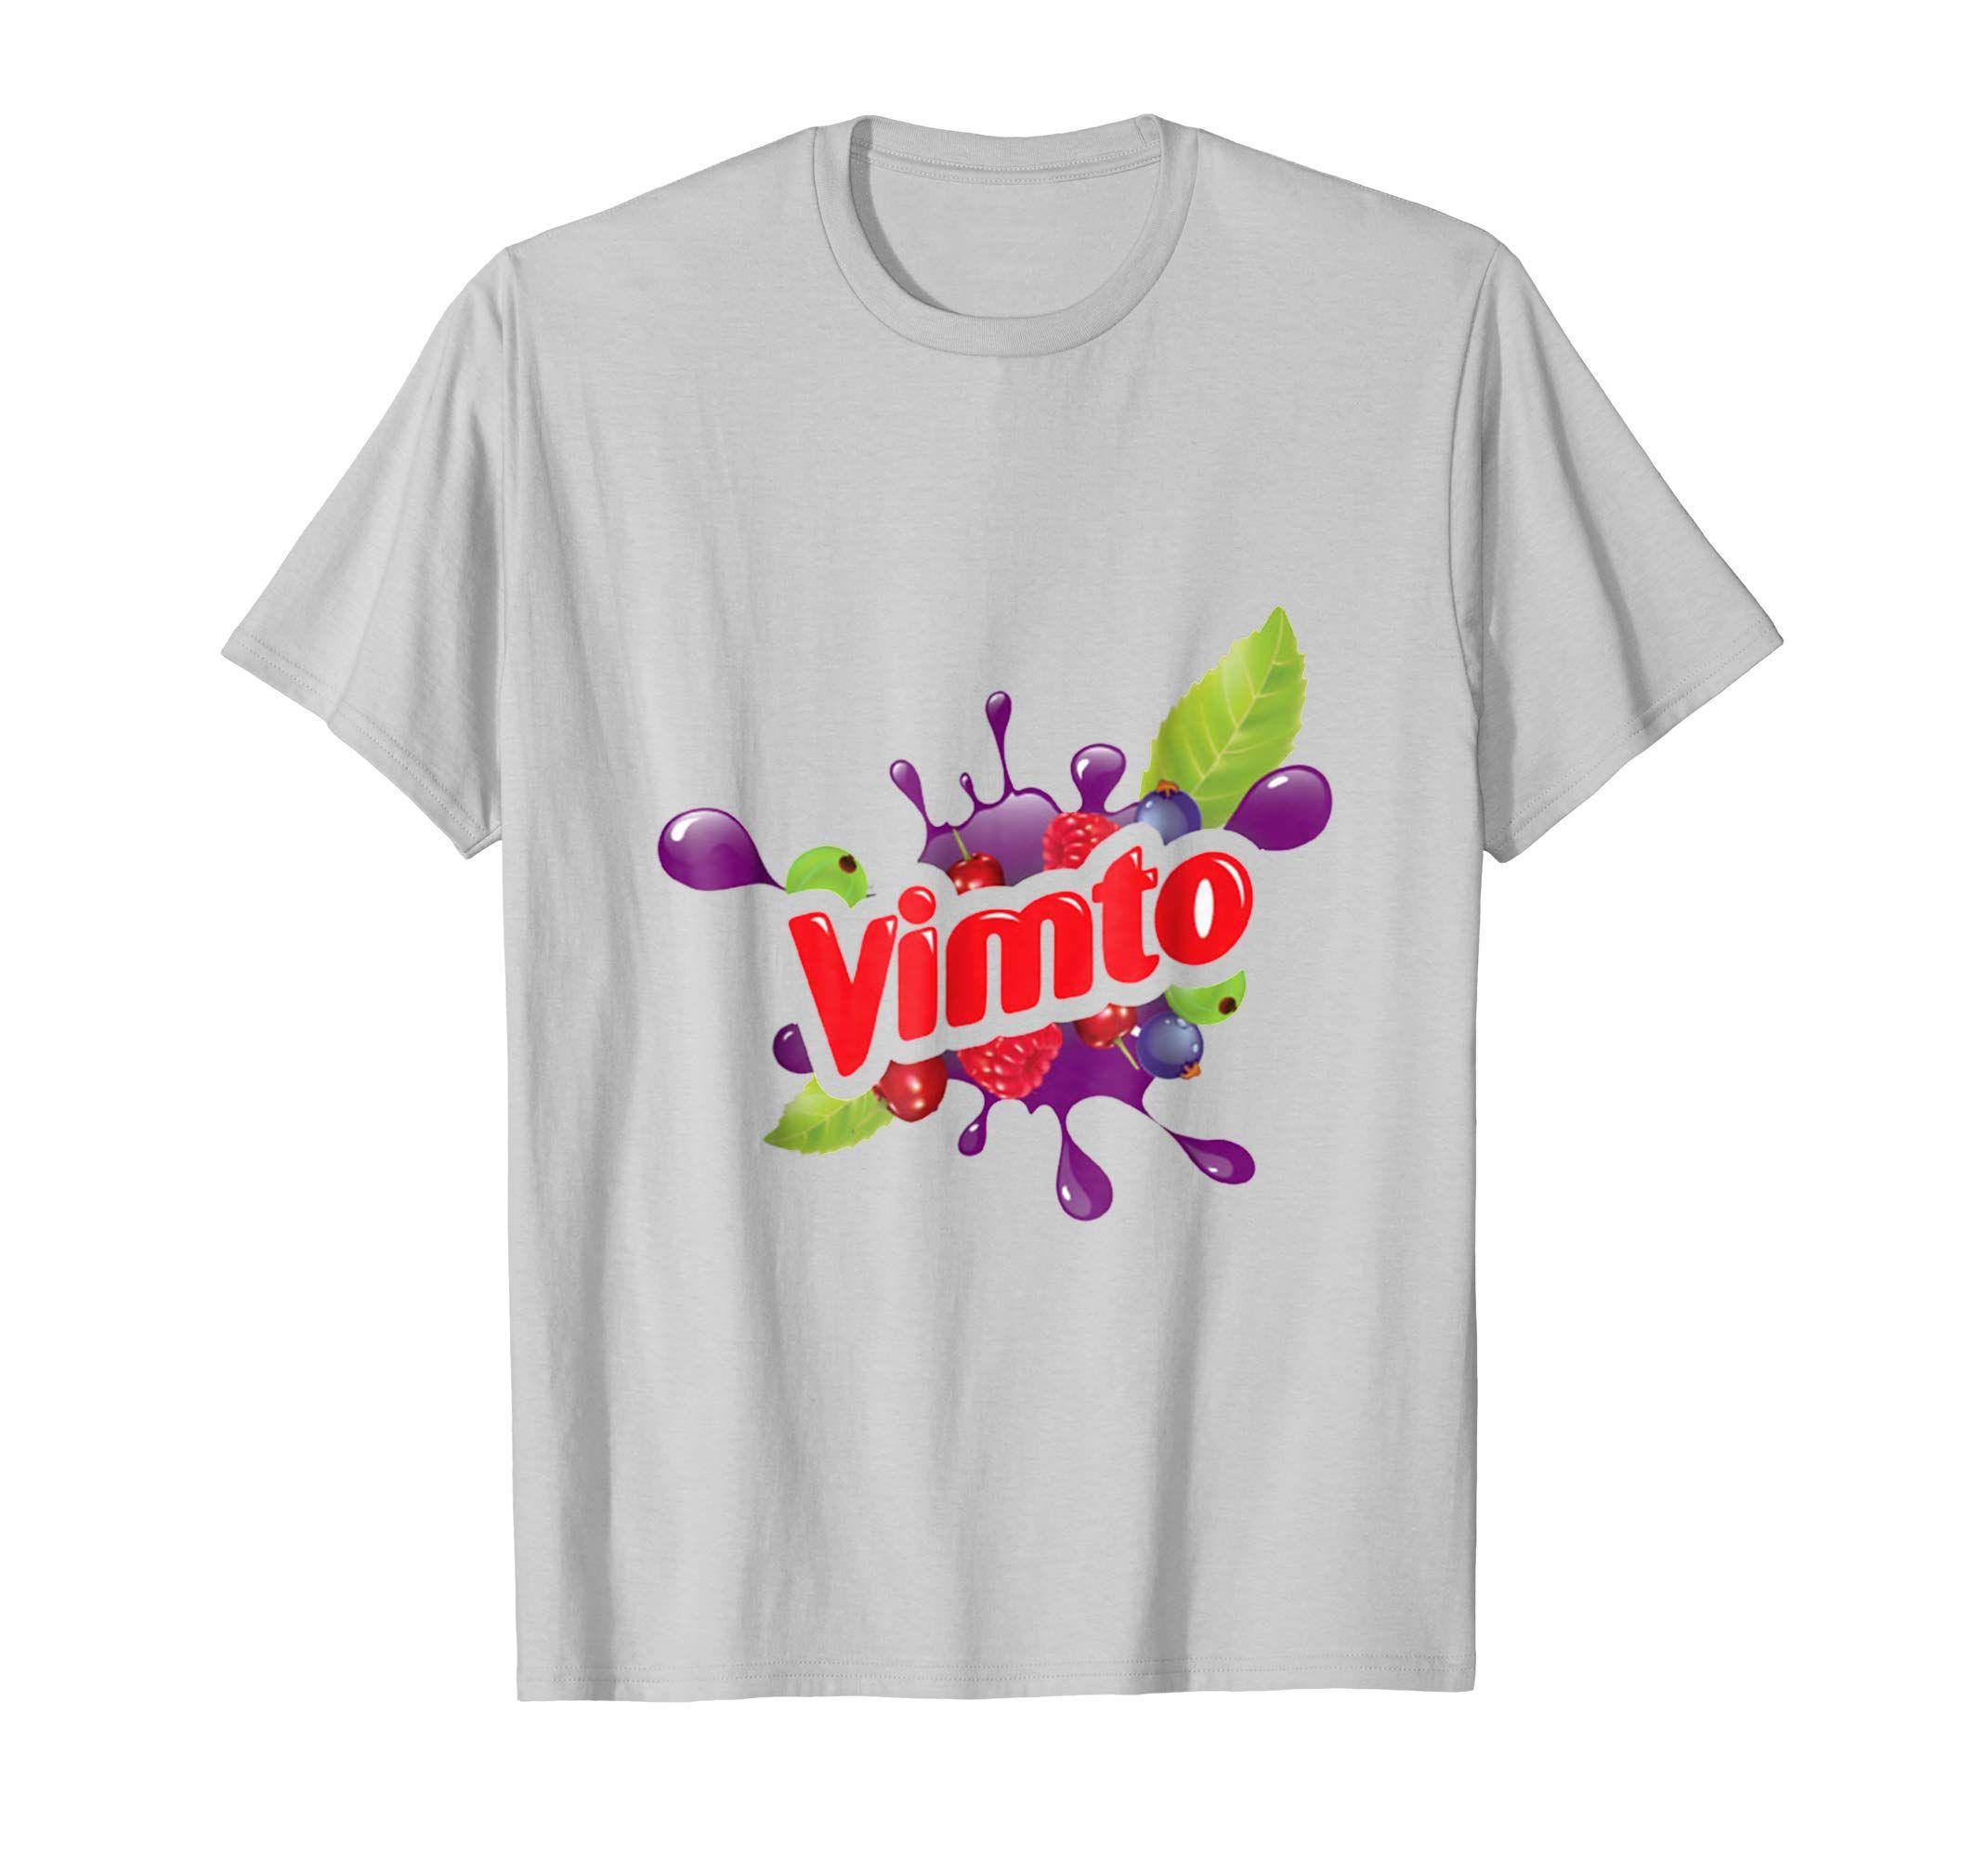 Vimto Logo - Amazon.com: Vimto logo shirt: Clothing